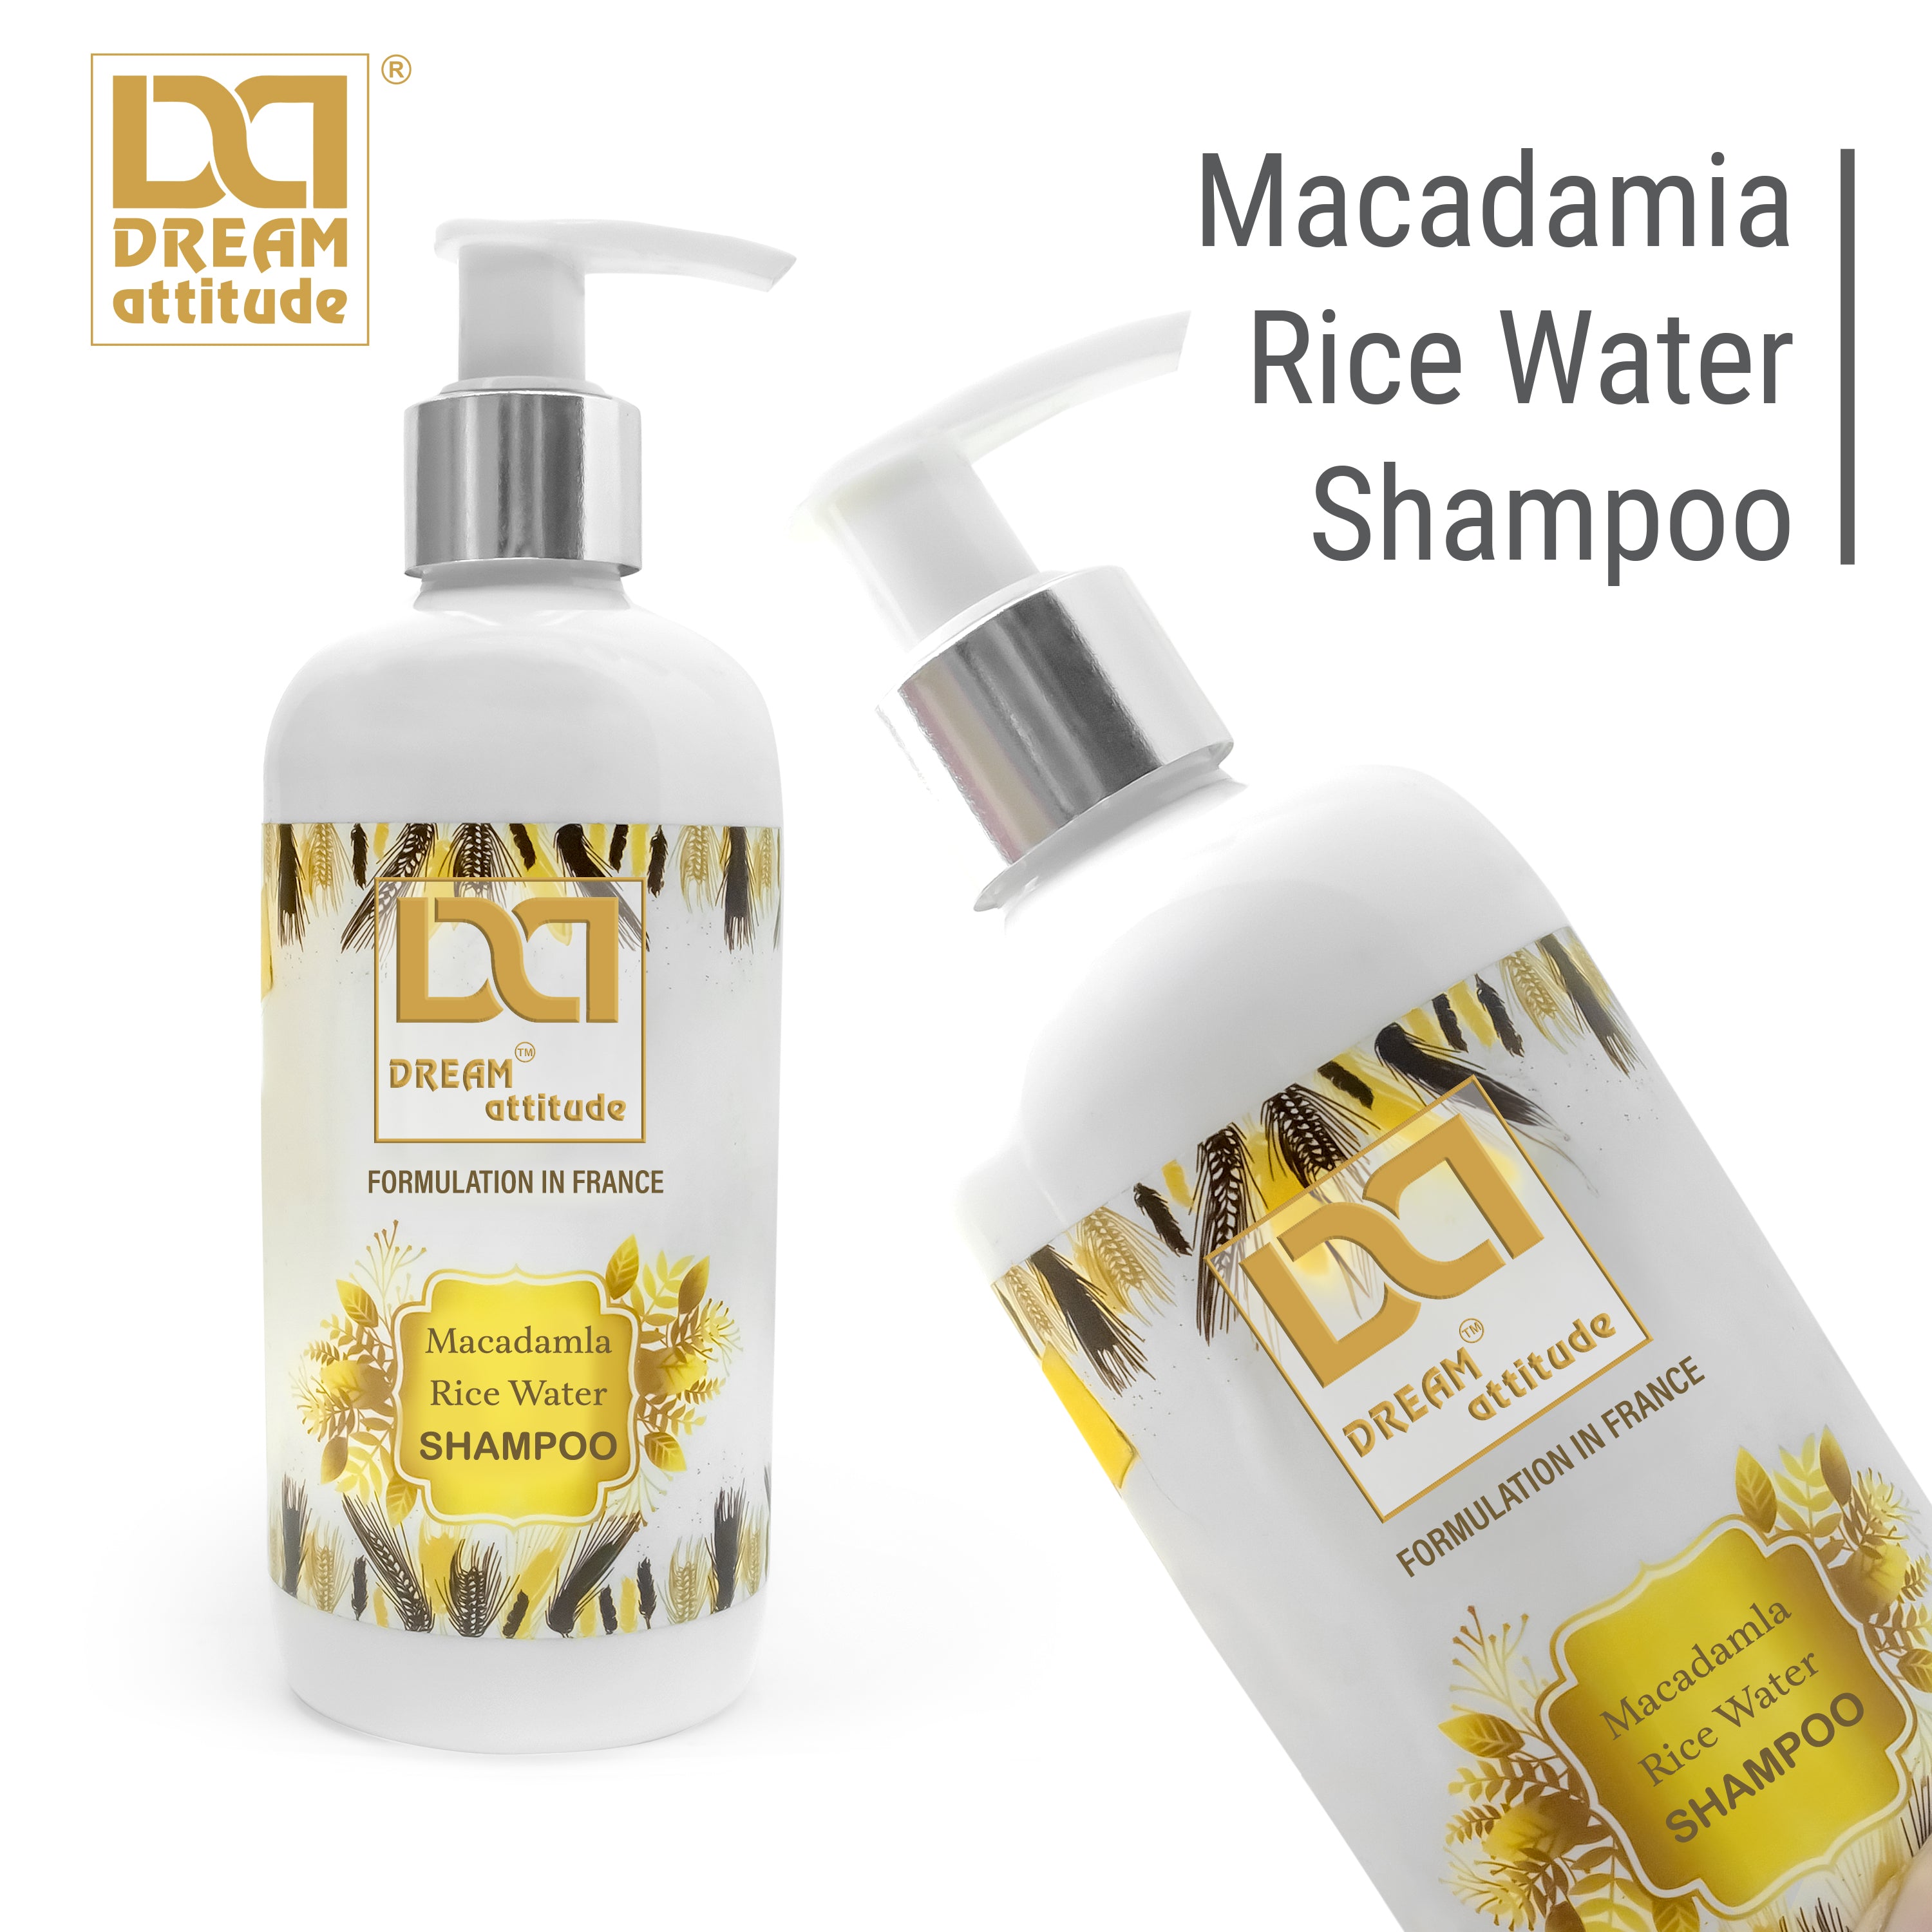 Dream Attitude Macadamia Rice Water Shampoo - Nourish, Strengthen, and Enhance Naturally  [300ML]